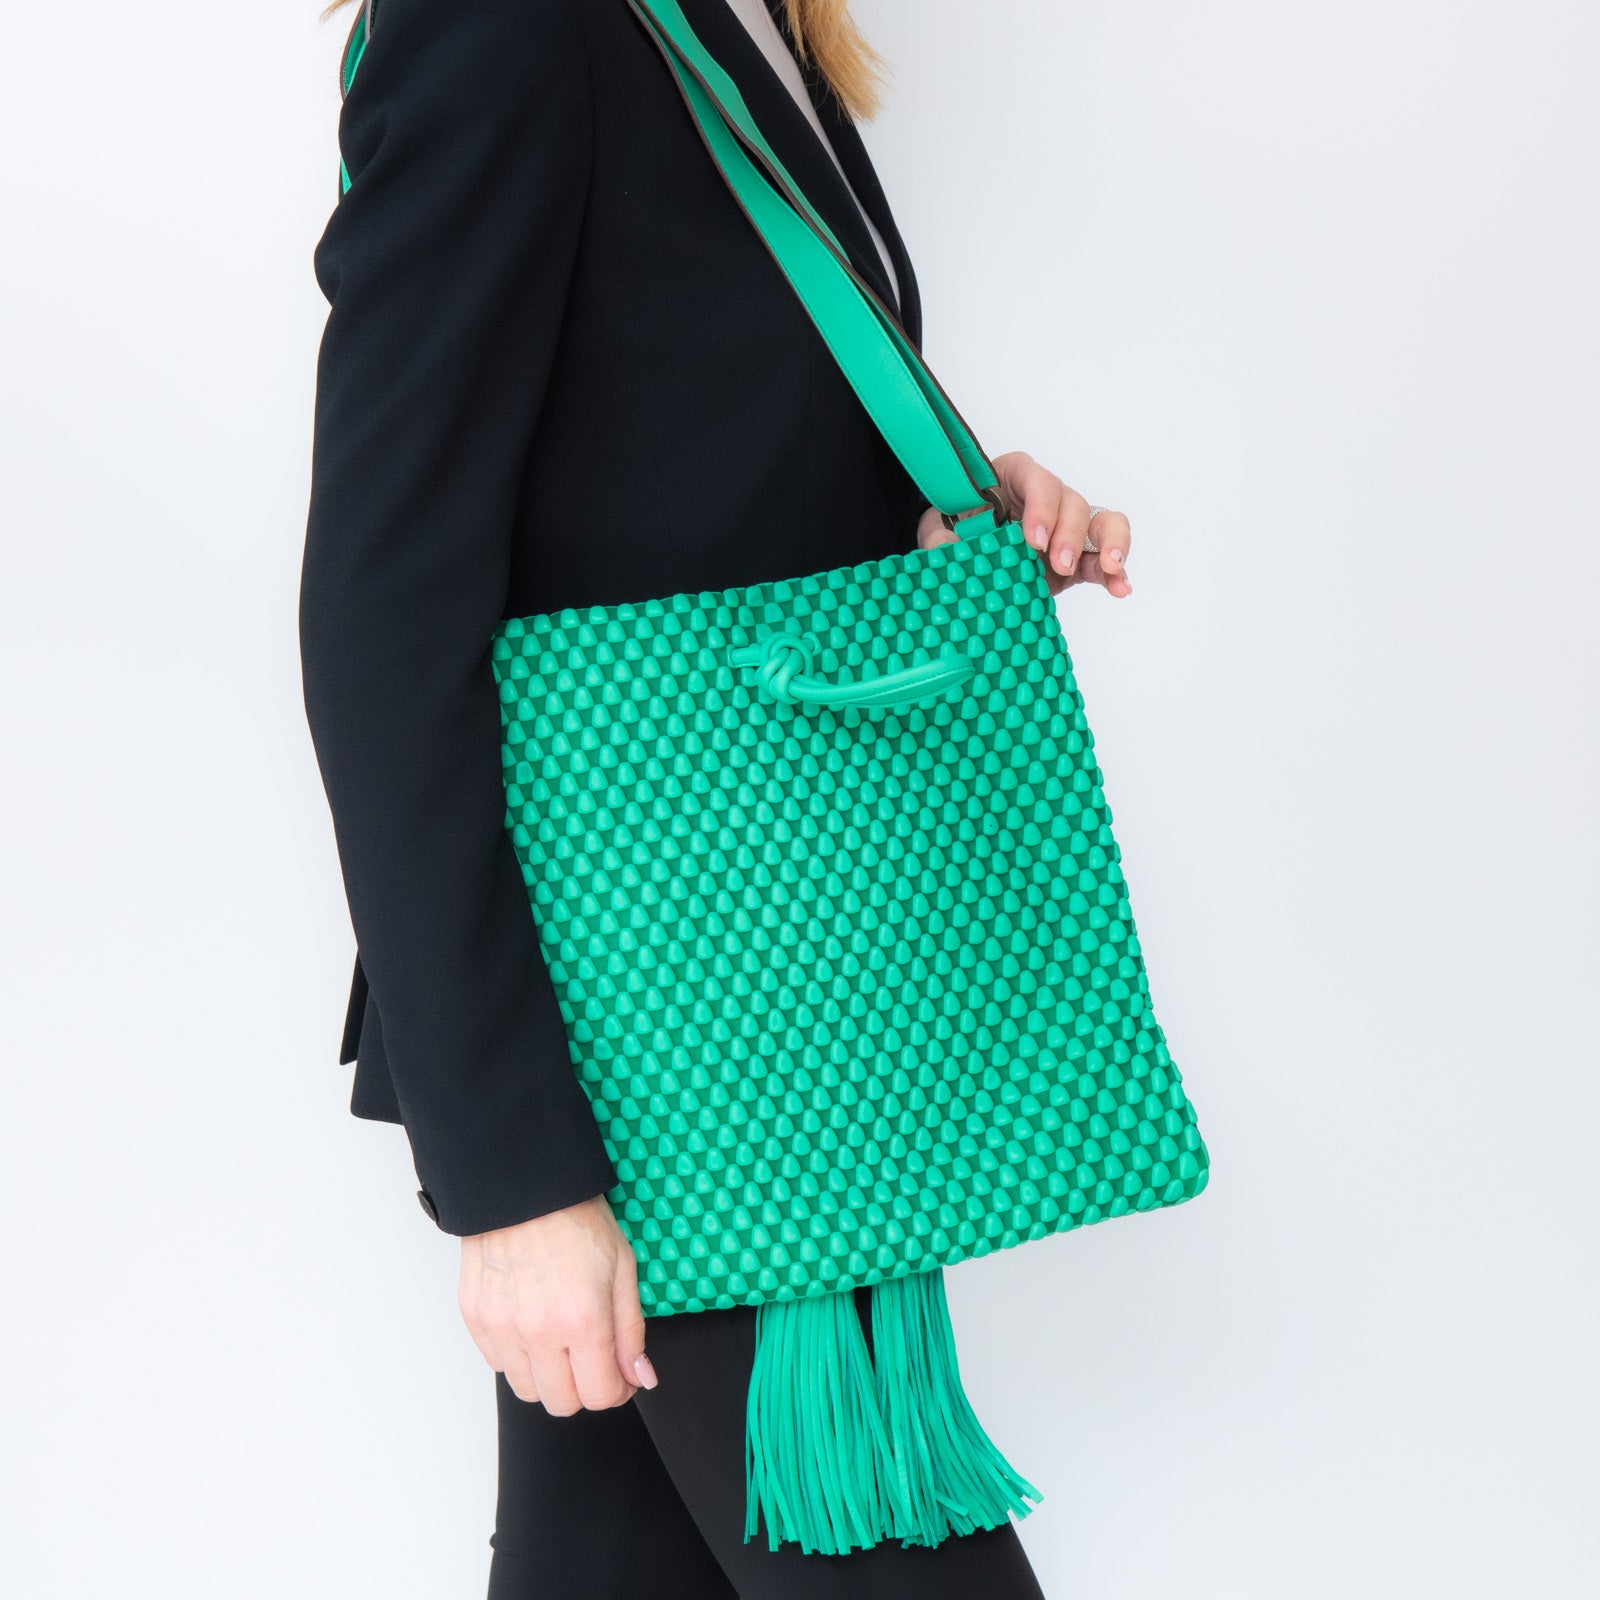 Tissa Fontaneda Bright Green Leather Bag - Image 5 of 8